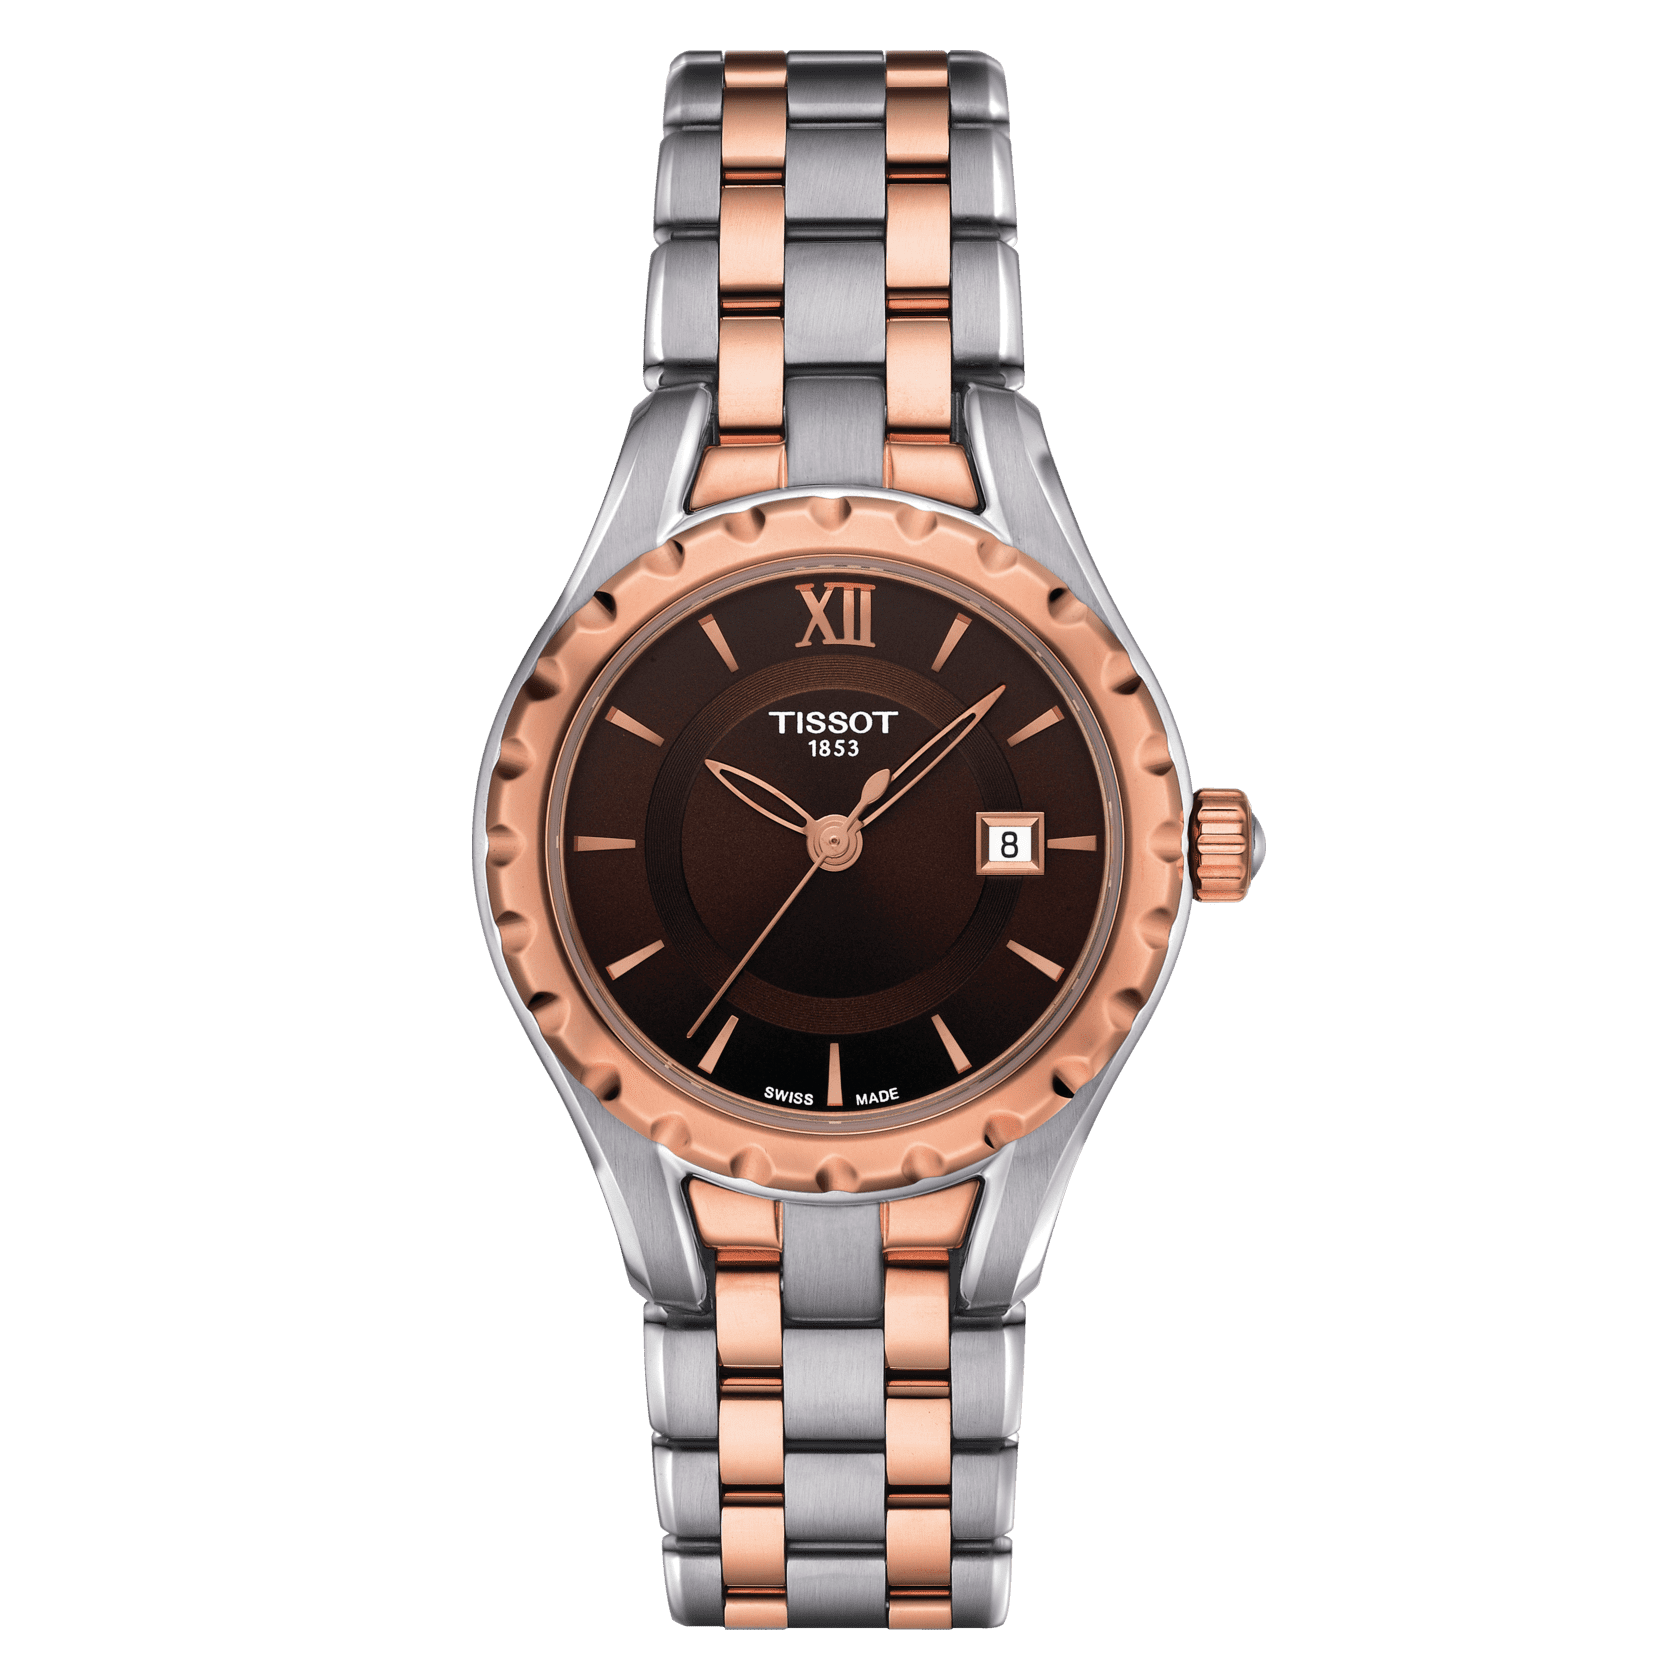 Replica Watches Cartier